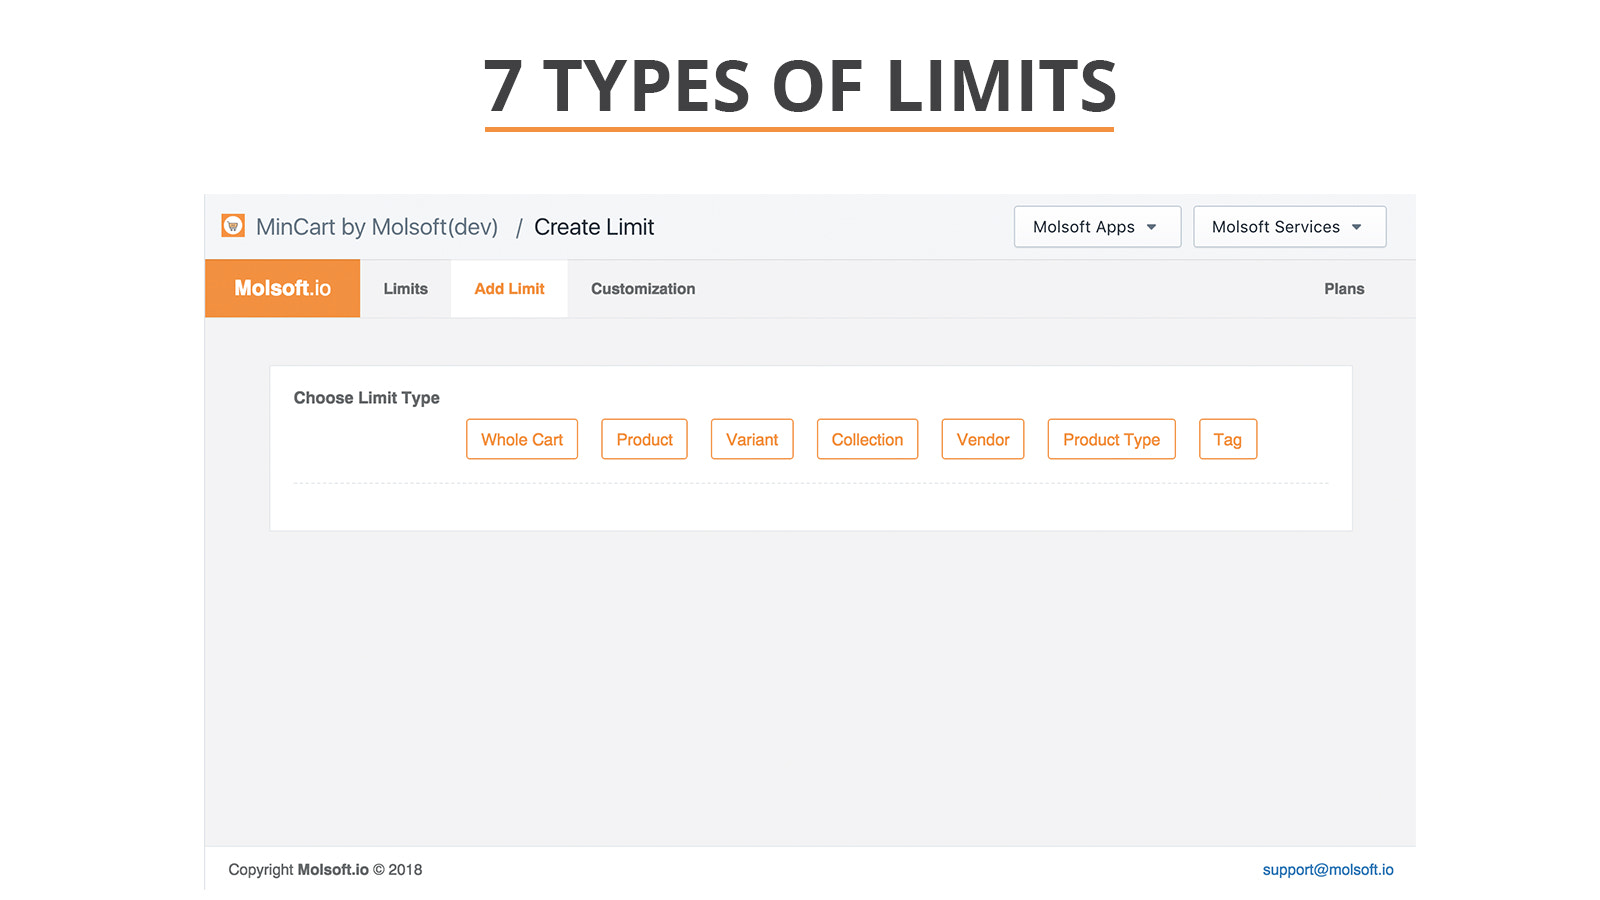 MinCart ‑ Min Max order limits